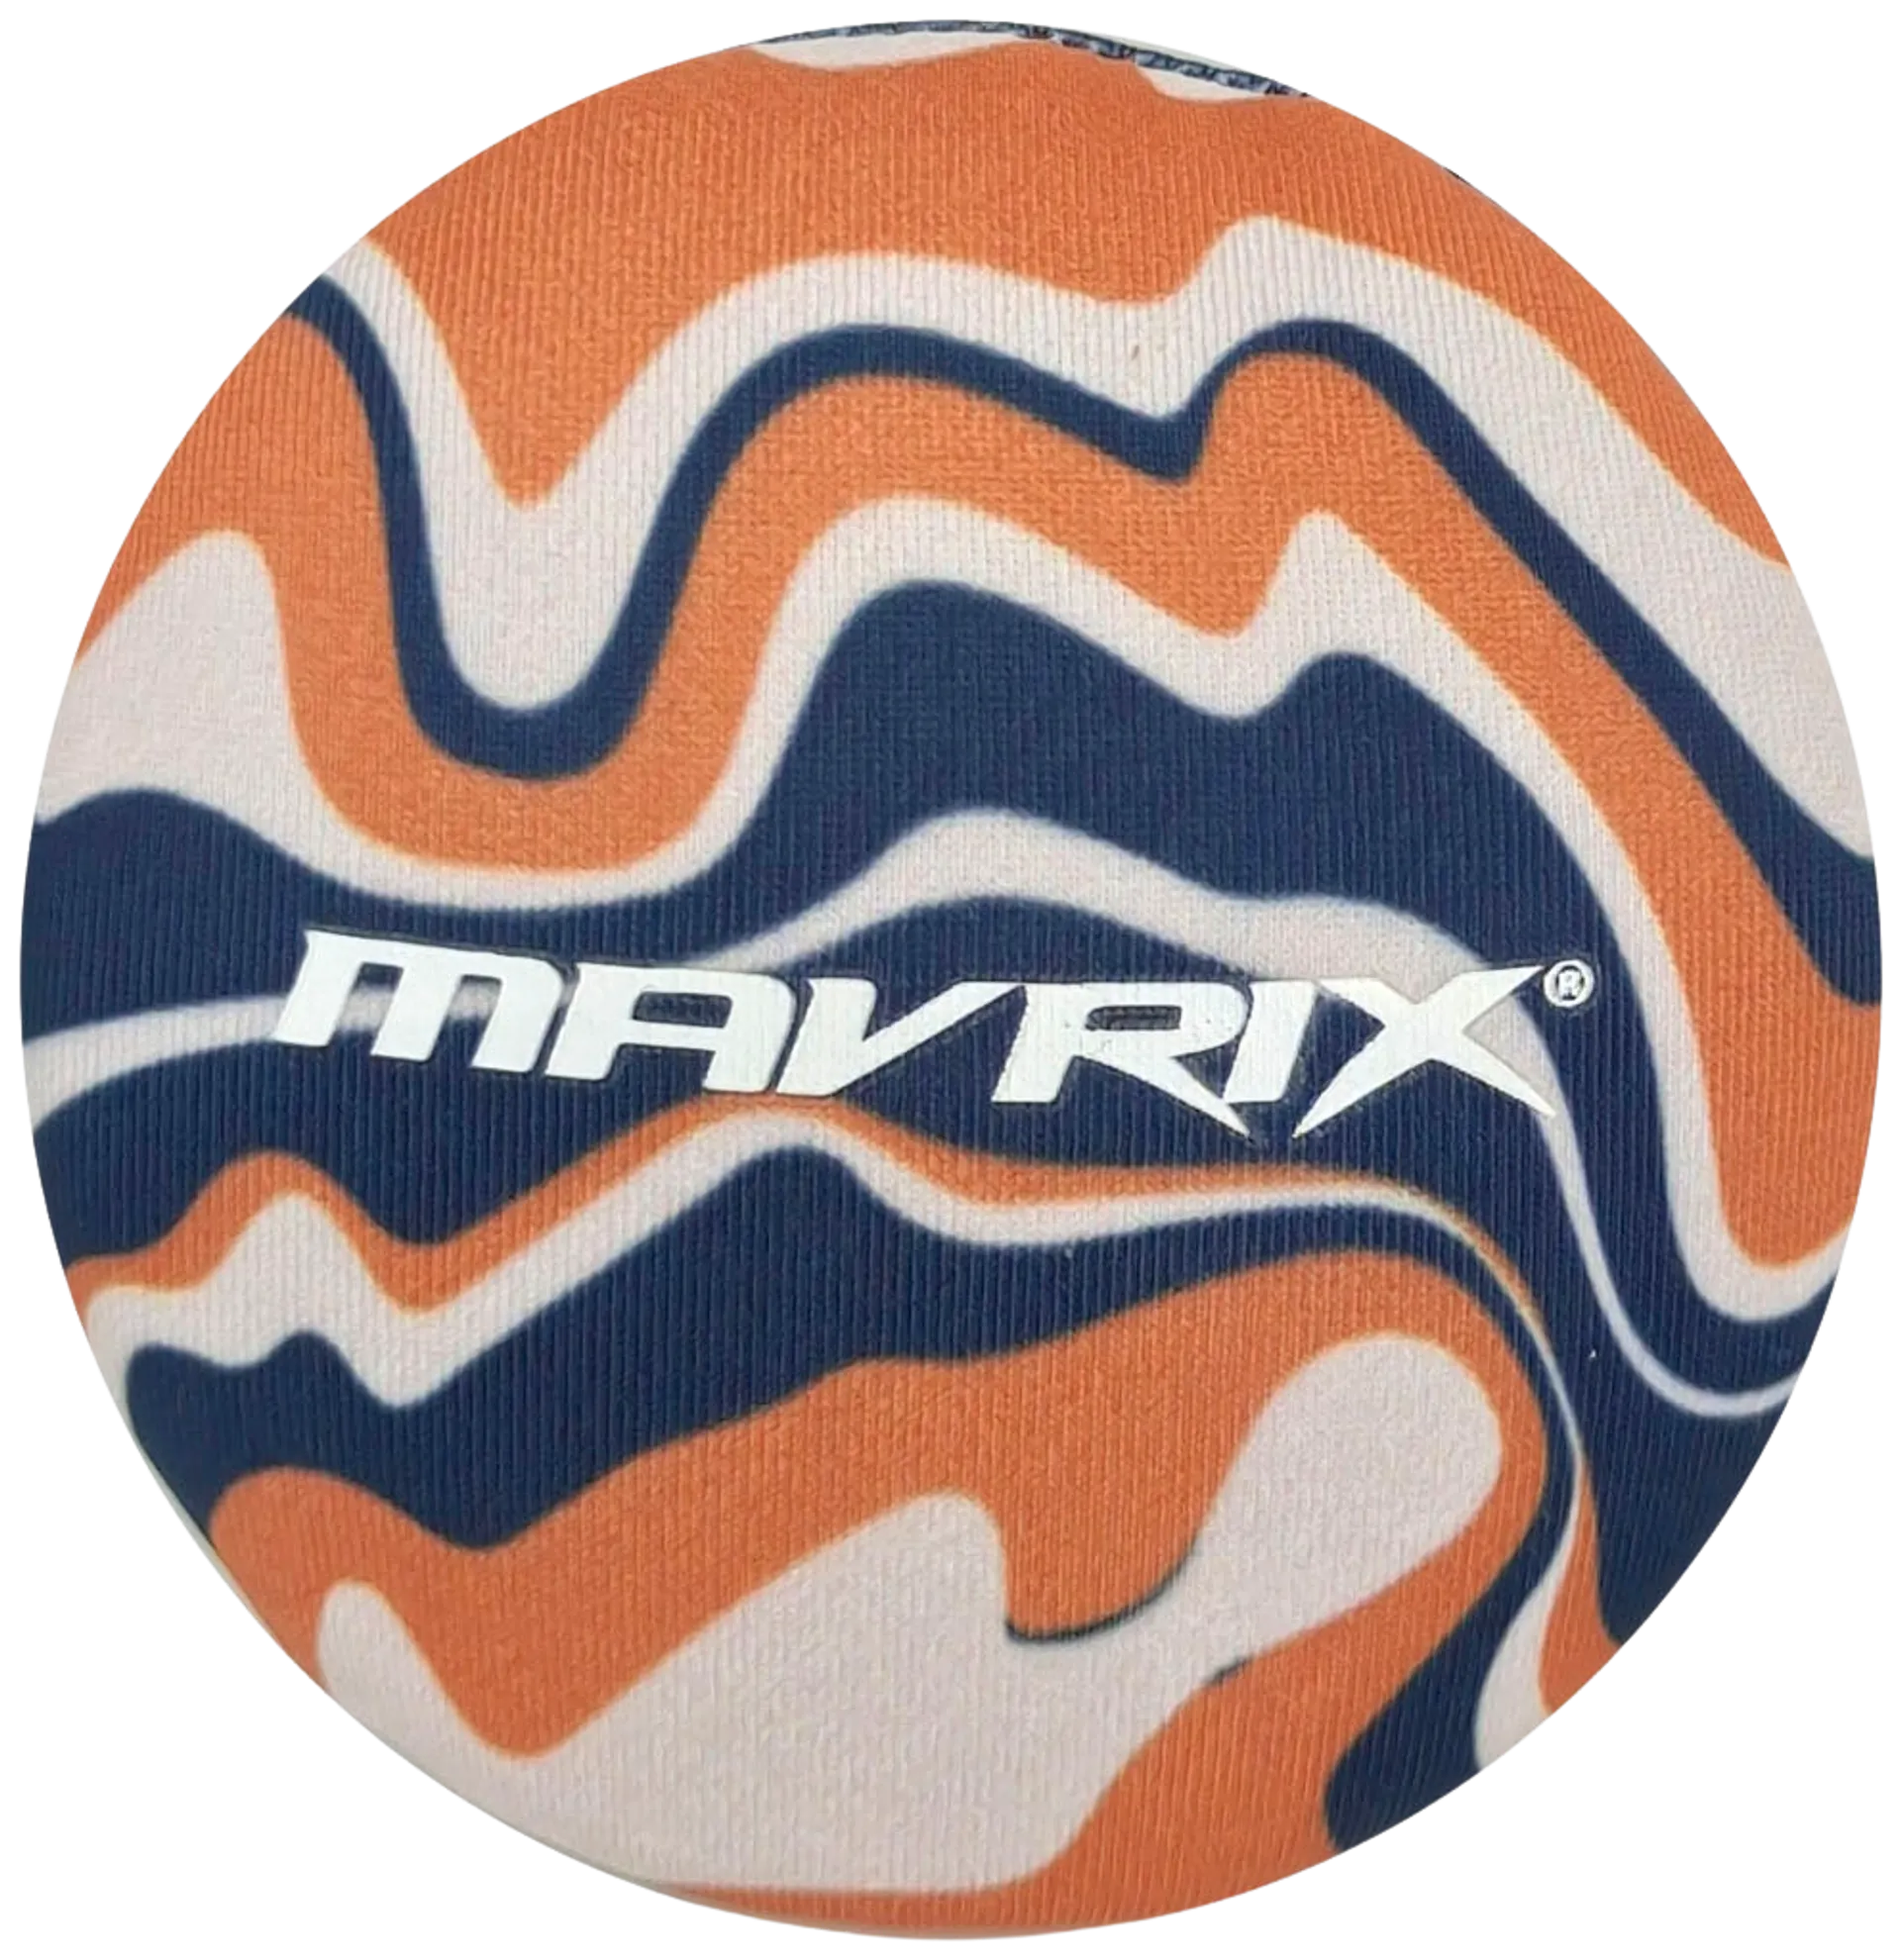 Mavrix Water disc -vesikiekko - 4